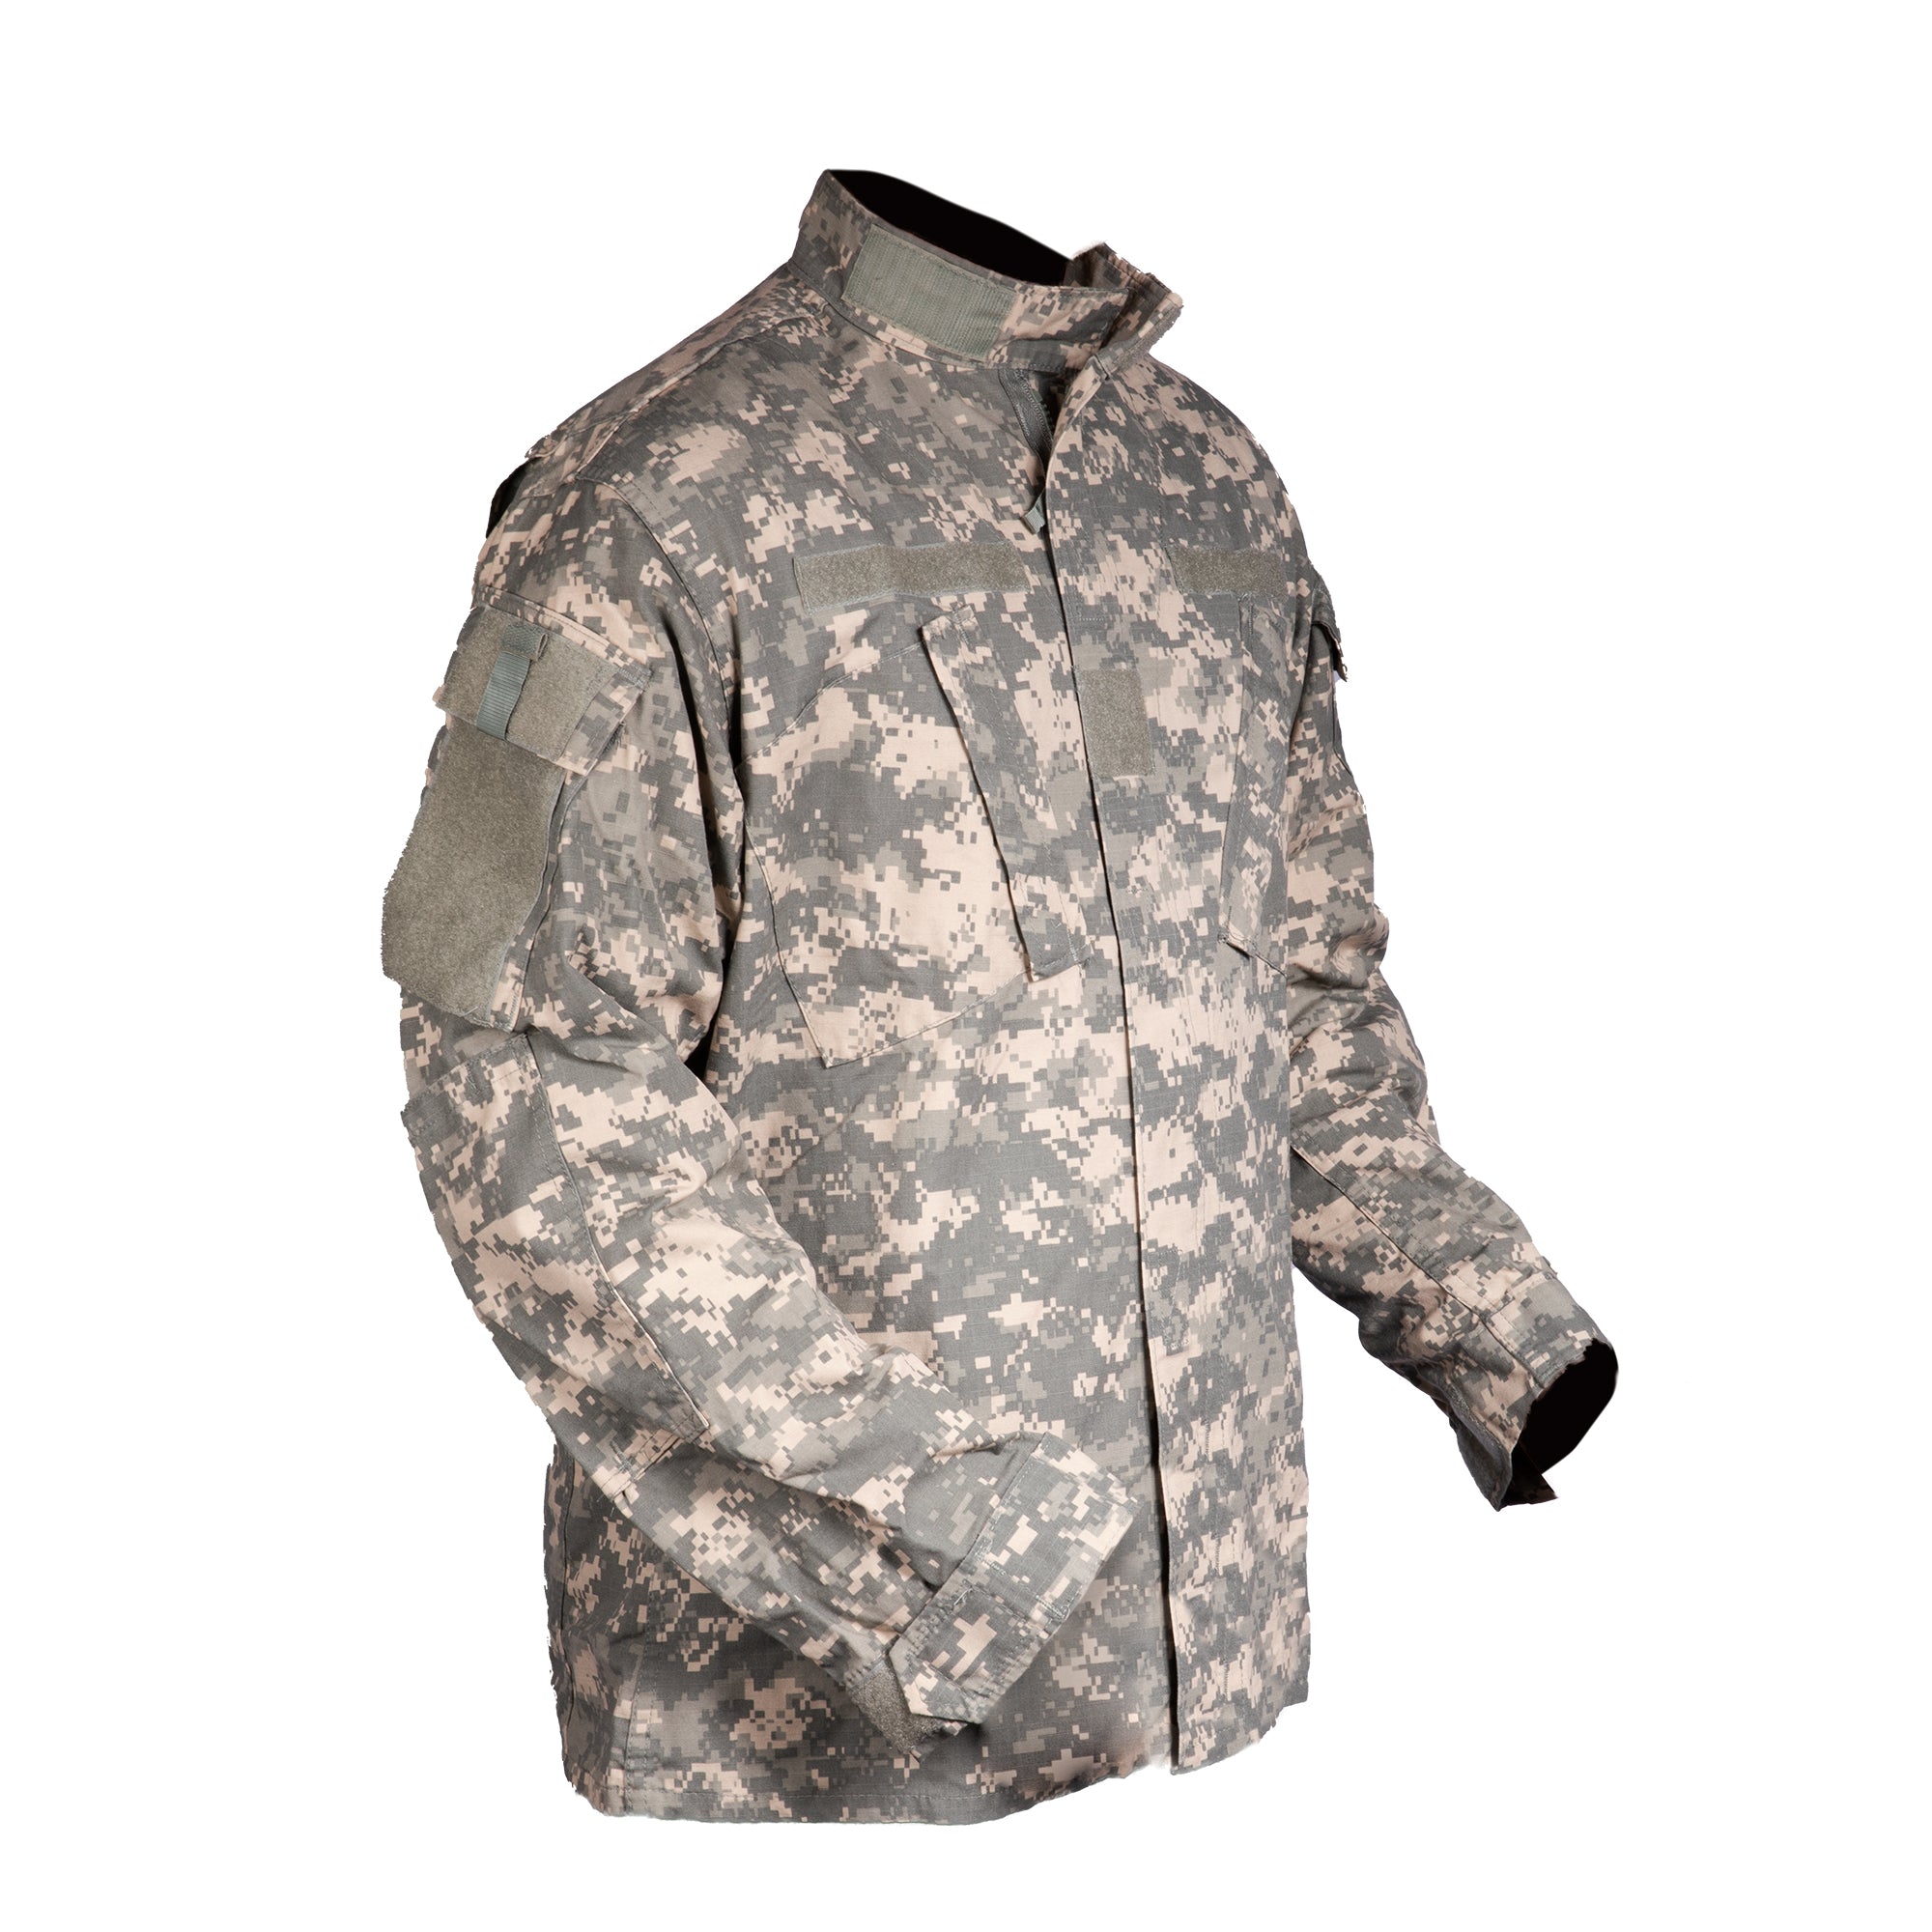 army uniform pattern